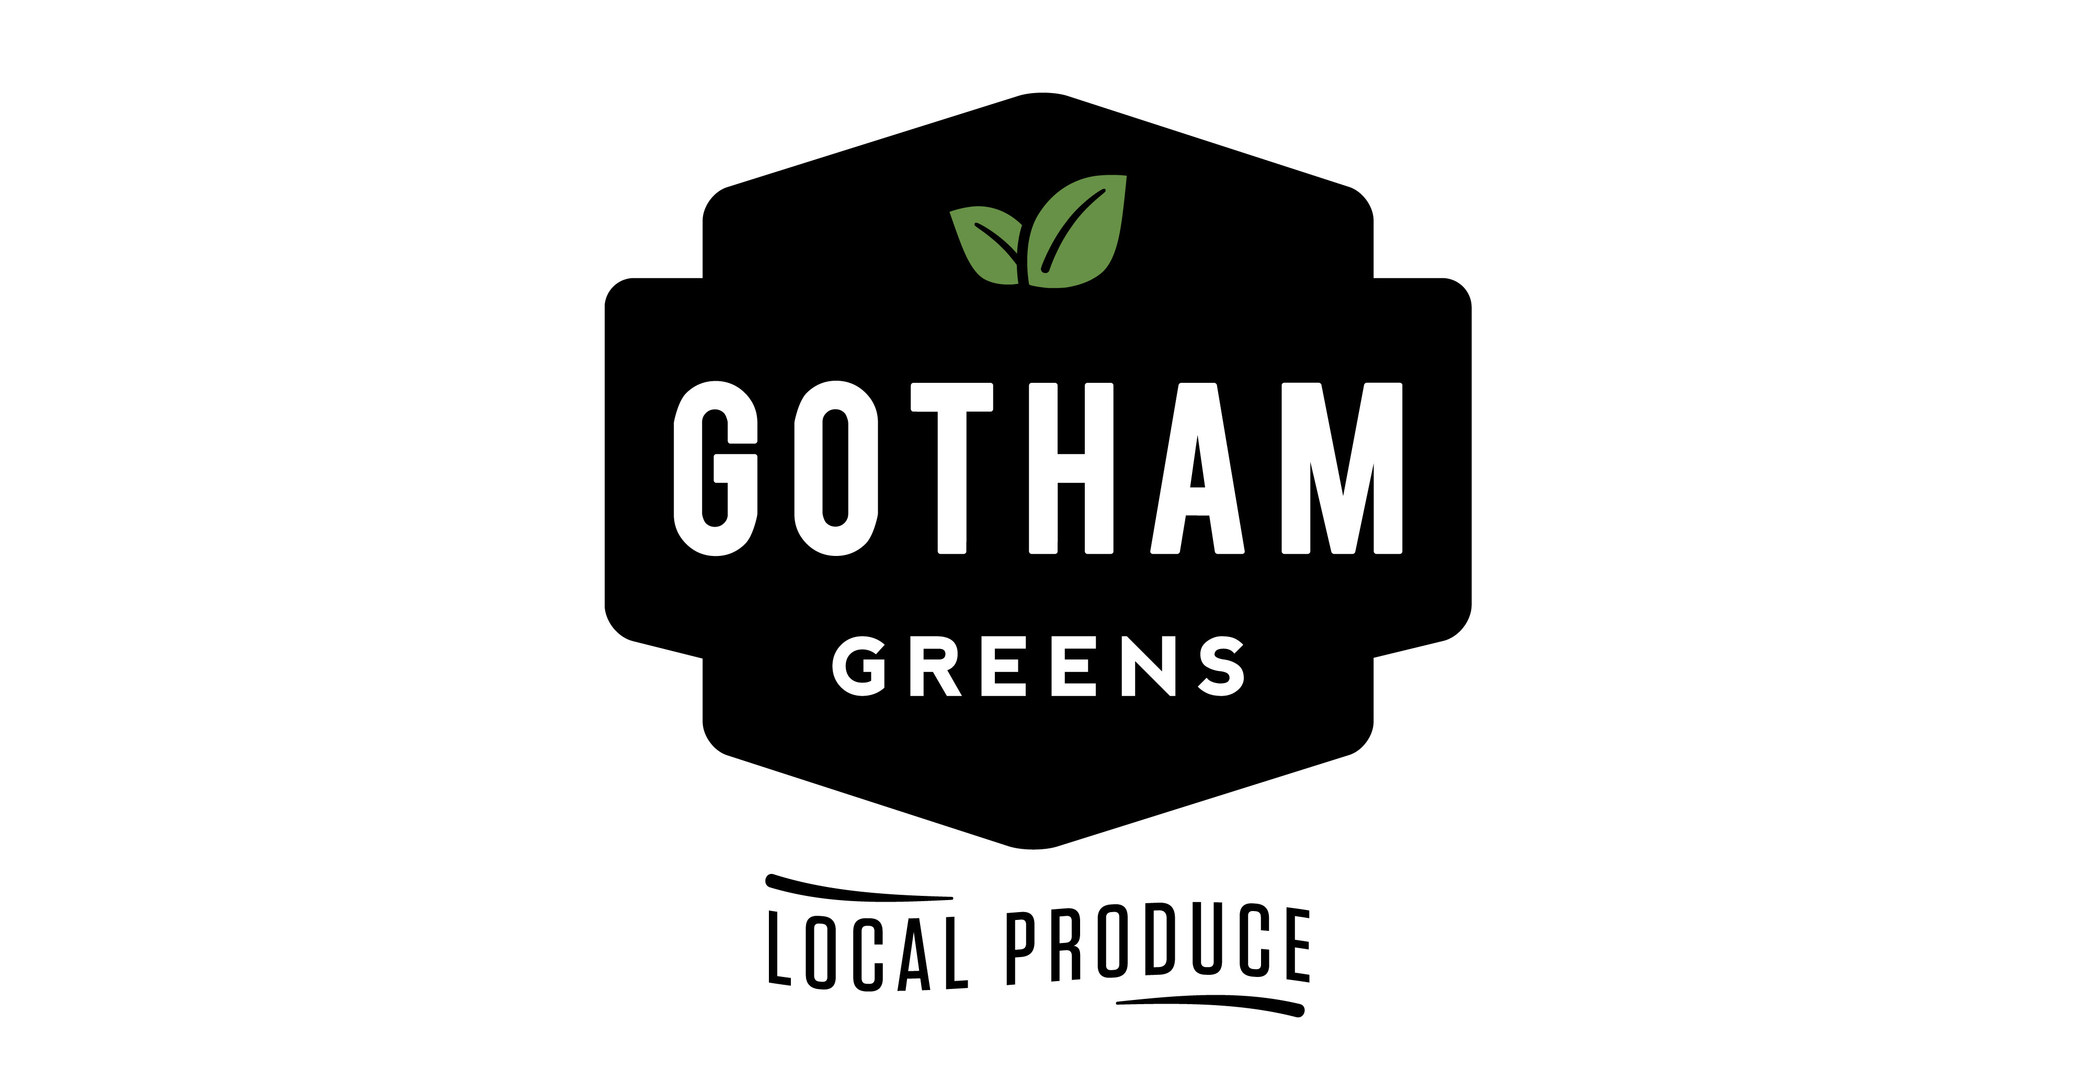 https://mma.prnewswire.com/media/708529/Gotham_Greens_Logo.jpg?p=facebook